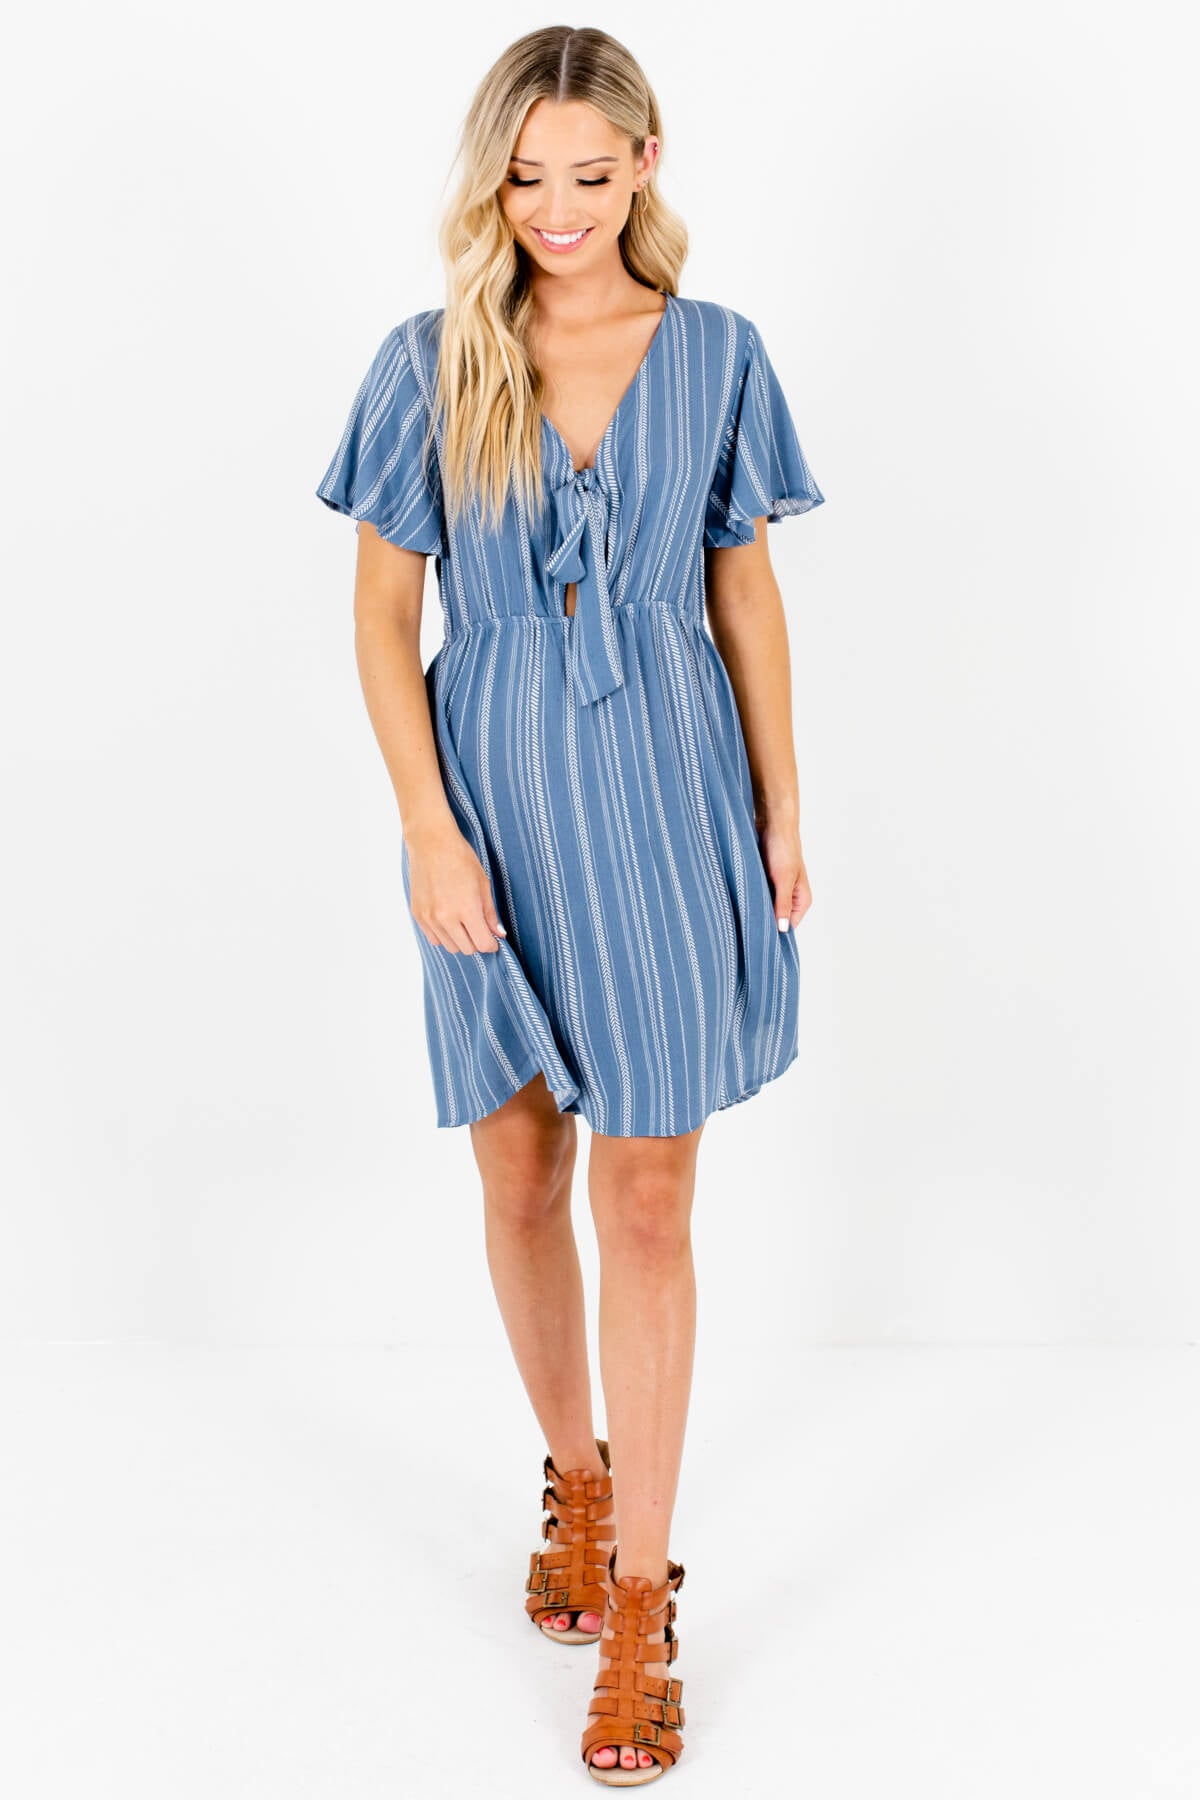 Blue White Patterned Mini Dresses Affordable Online Boutique